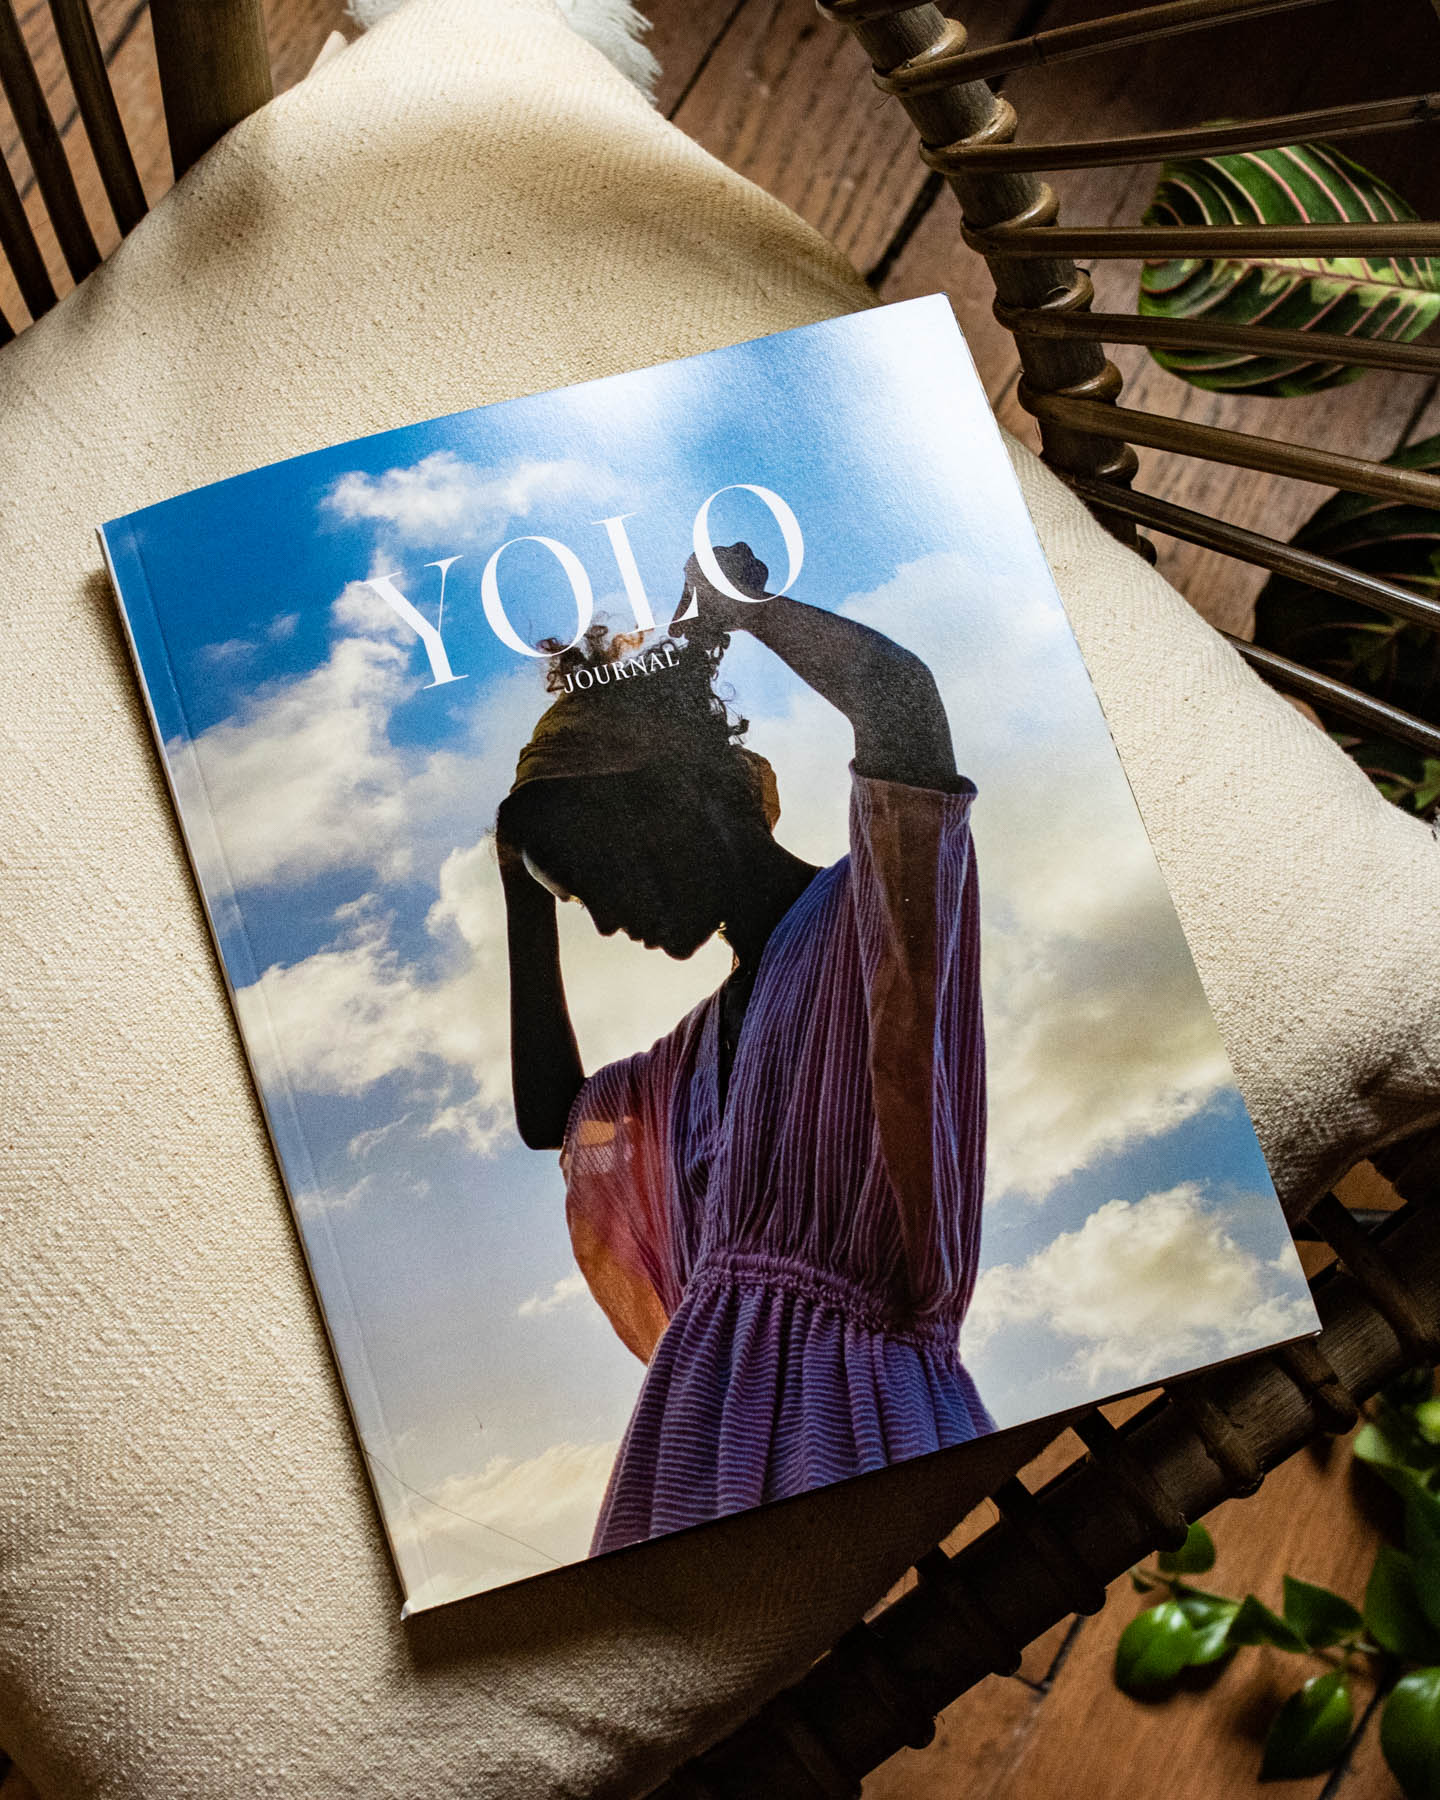 Yolo Journal Magazine Yolanda Edwards Printemps 2021